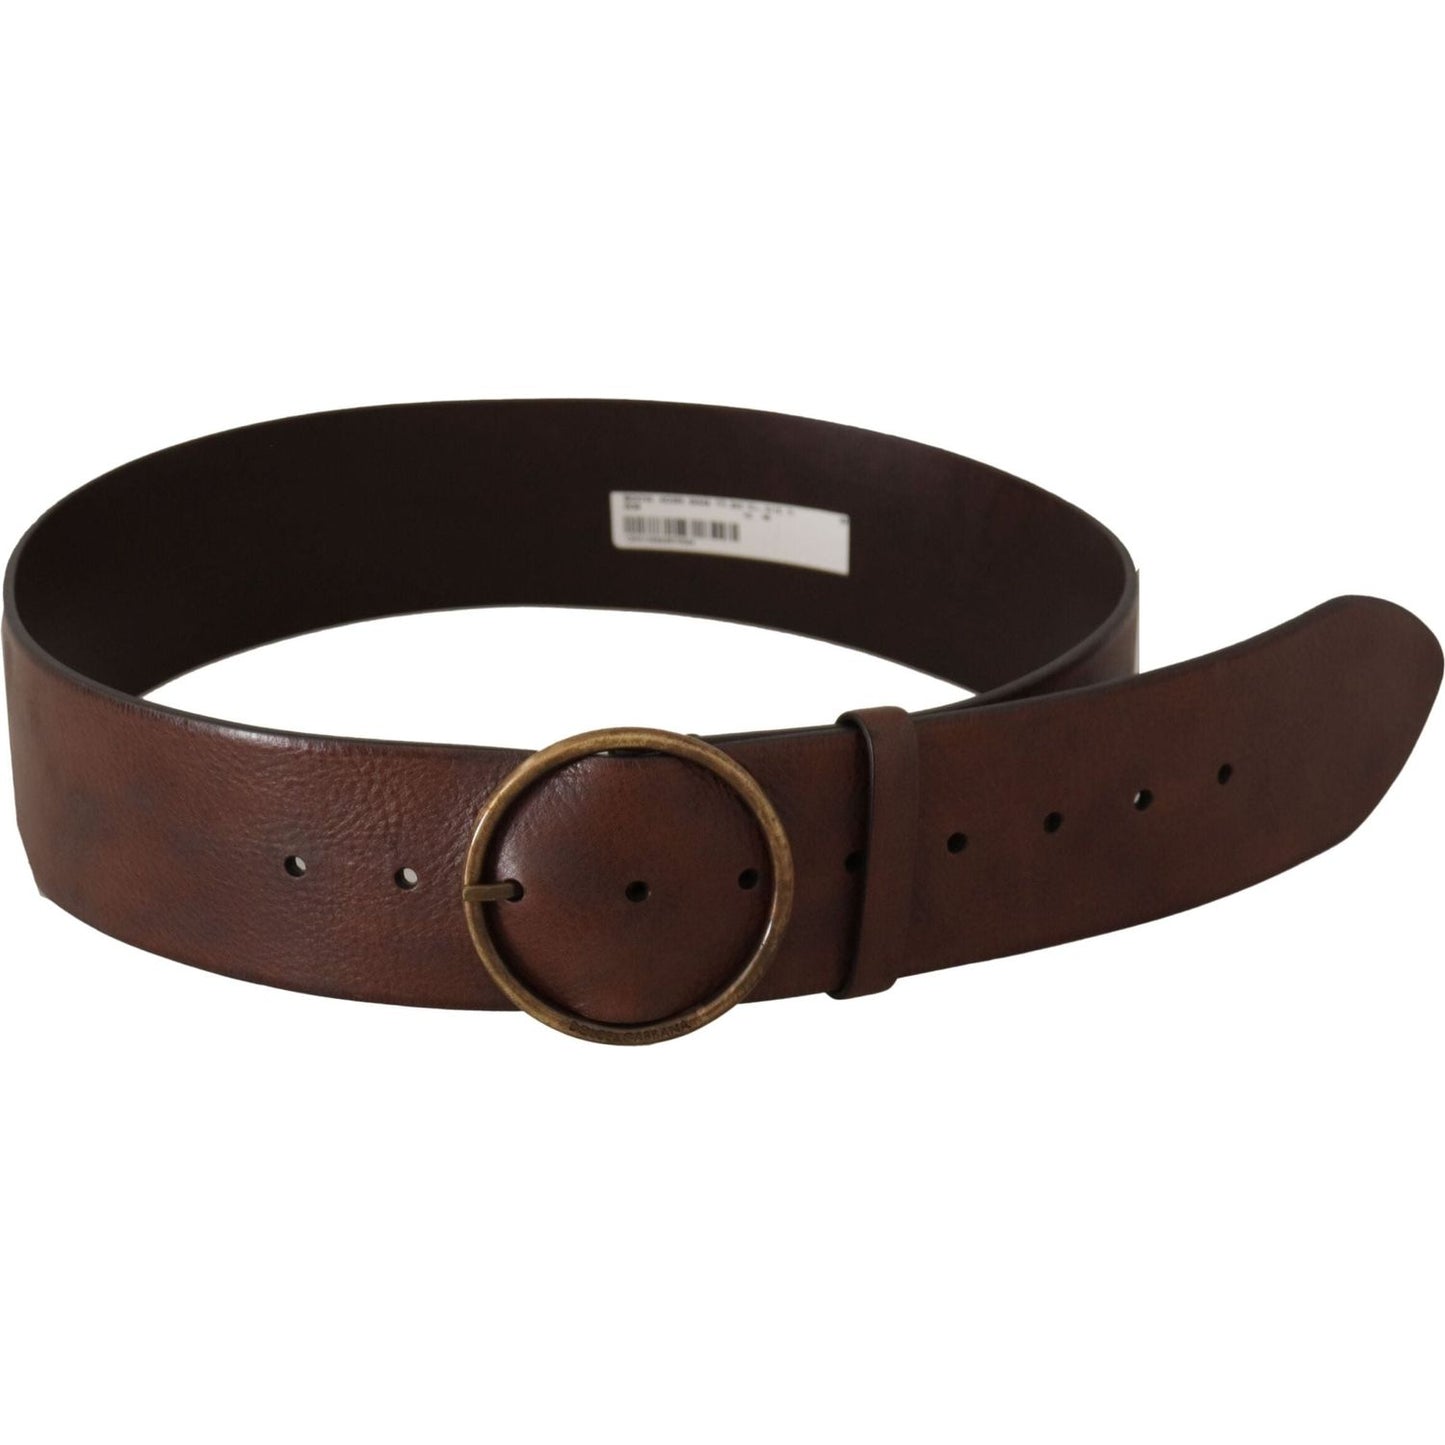 Dolce & Gabbana Elegant Leather Belt with Engraved Buckle dark-brown-wide-waist-leather-metal-round-buckle-belt